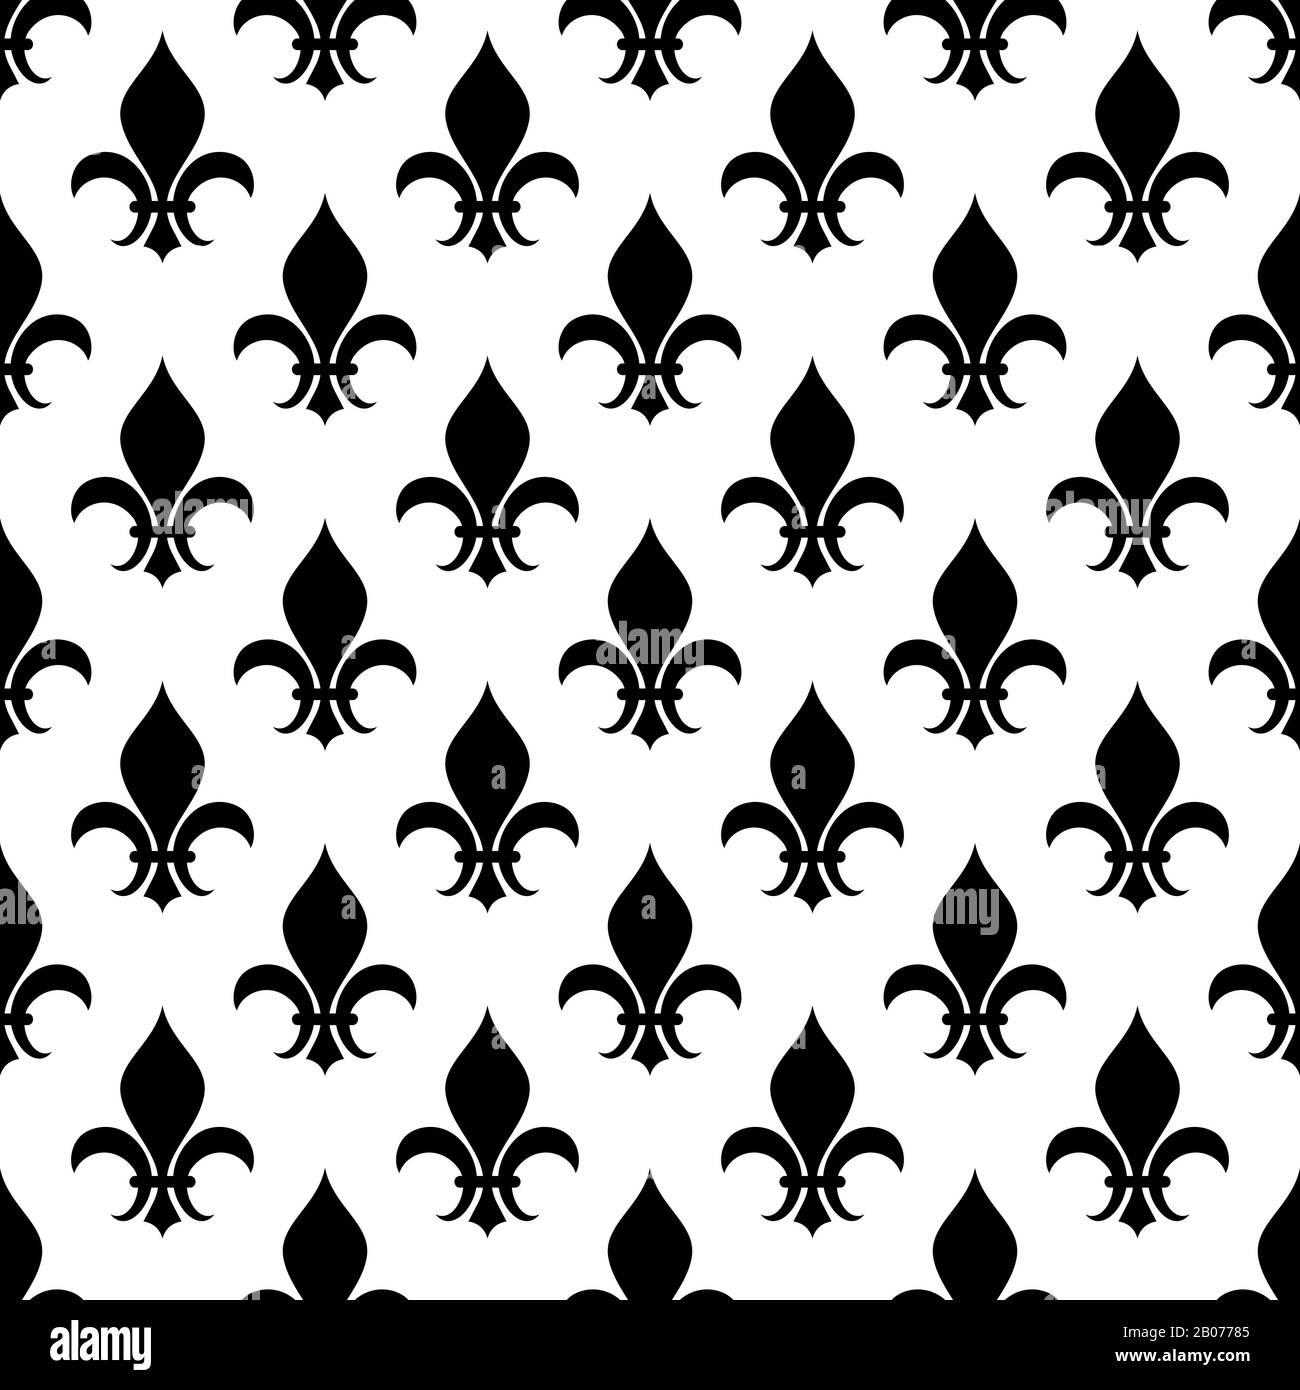 Vector fleur de lis seamless pattern in black and white color. Background design floral illustration Stock Vector